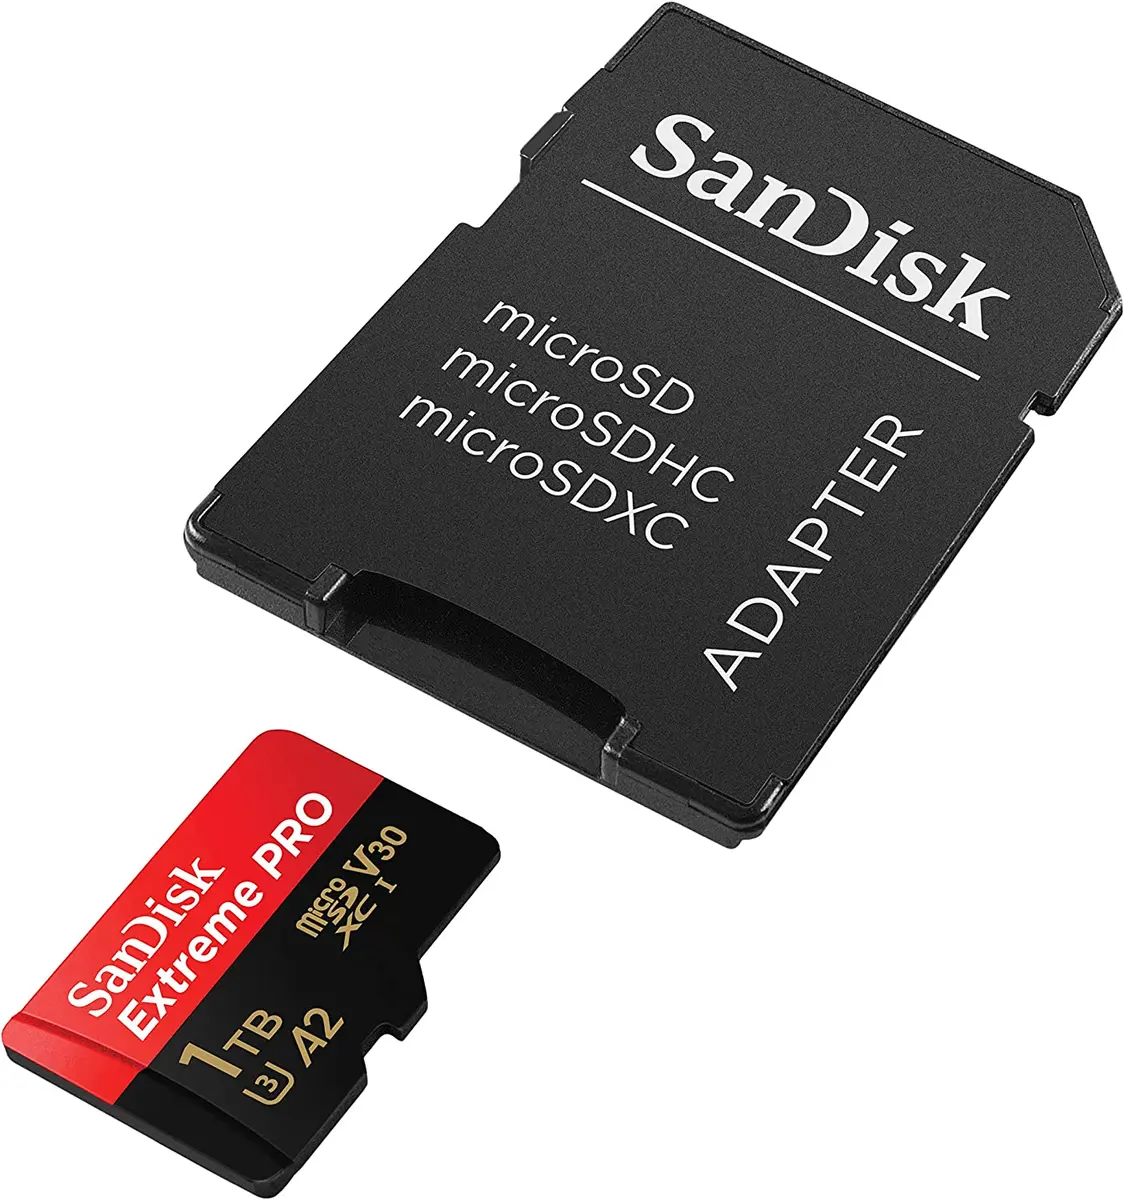 3. Sandisk 1TB A2 Extreme Pro 170mb/s MicroSDXC